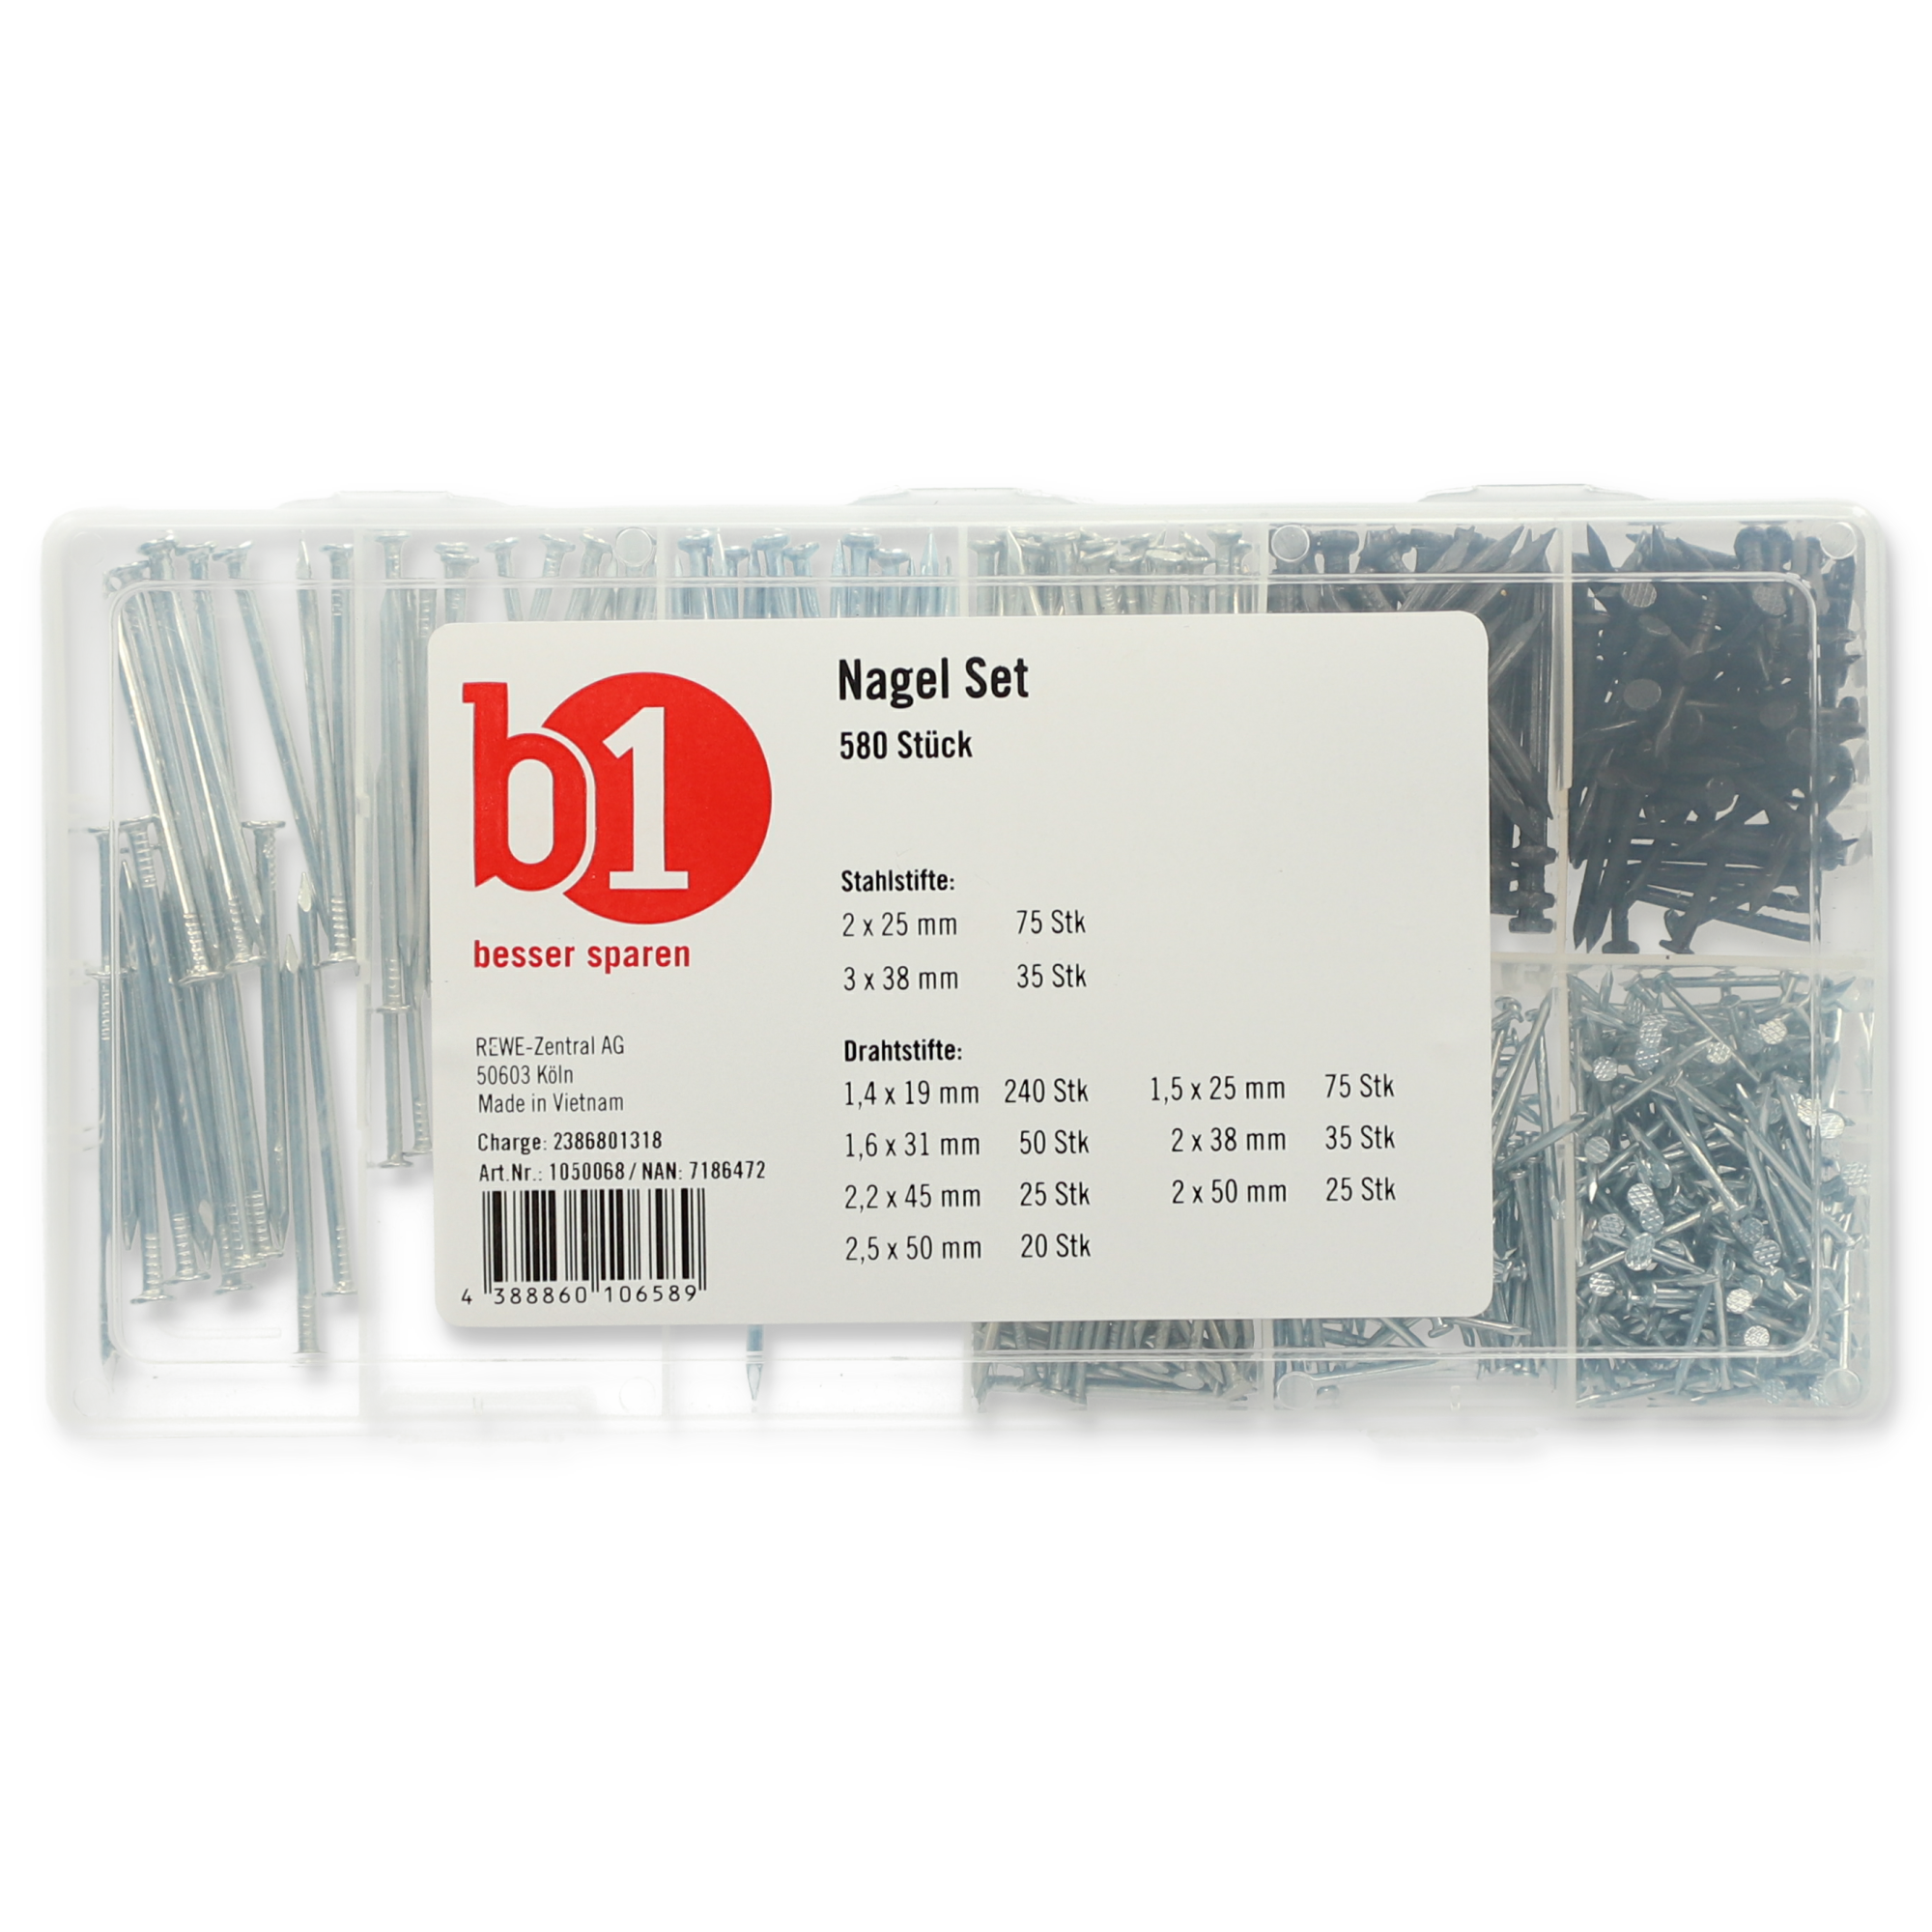 Nagel-Set 580-teilig + product picture